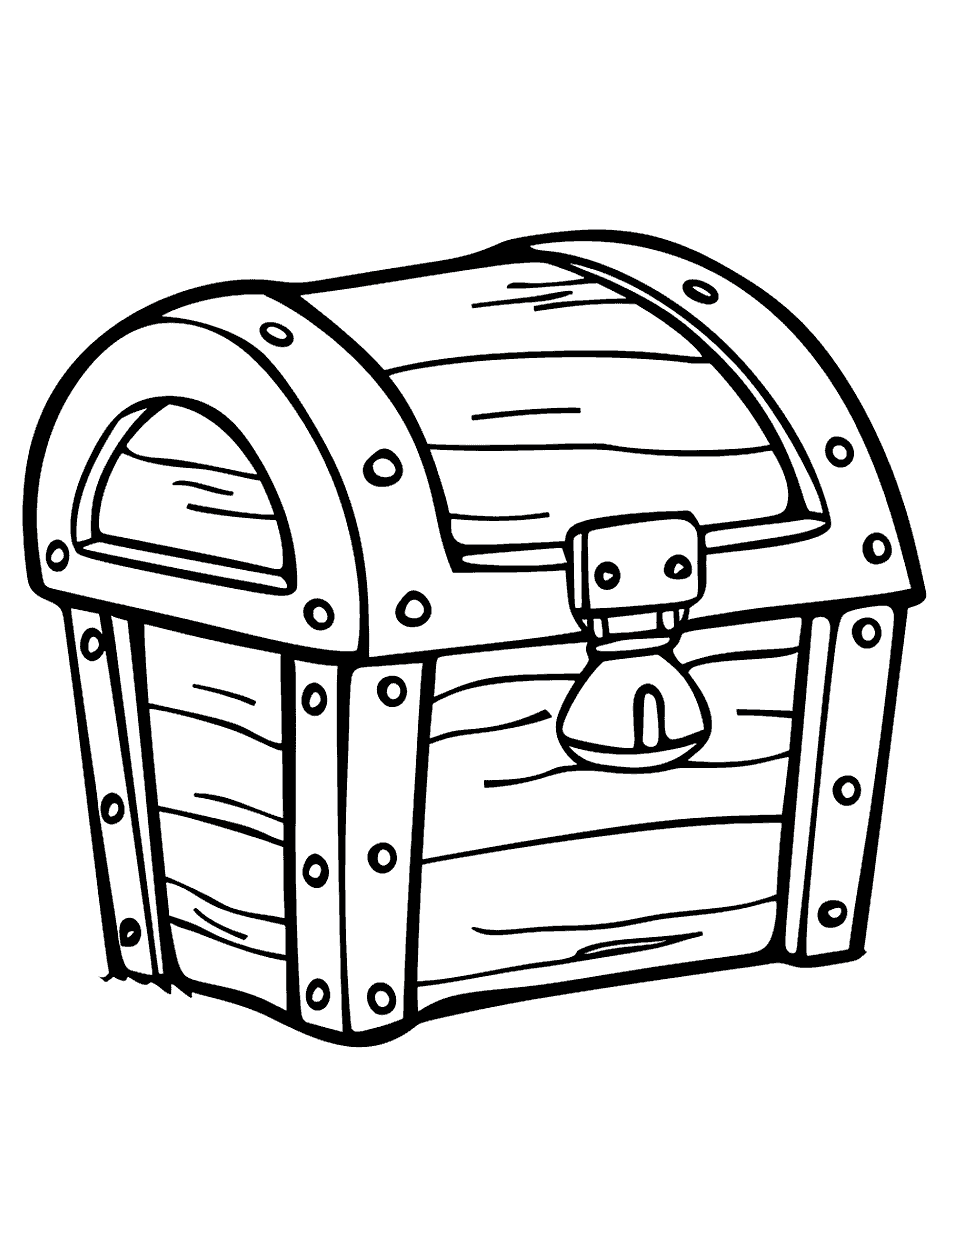 Treasure Hunt Chest Coloring Page - A simple treasure chest.